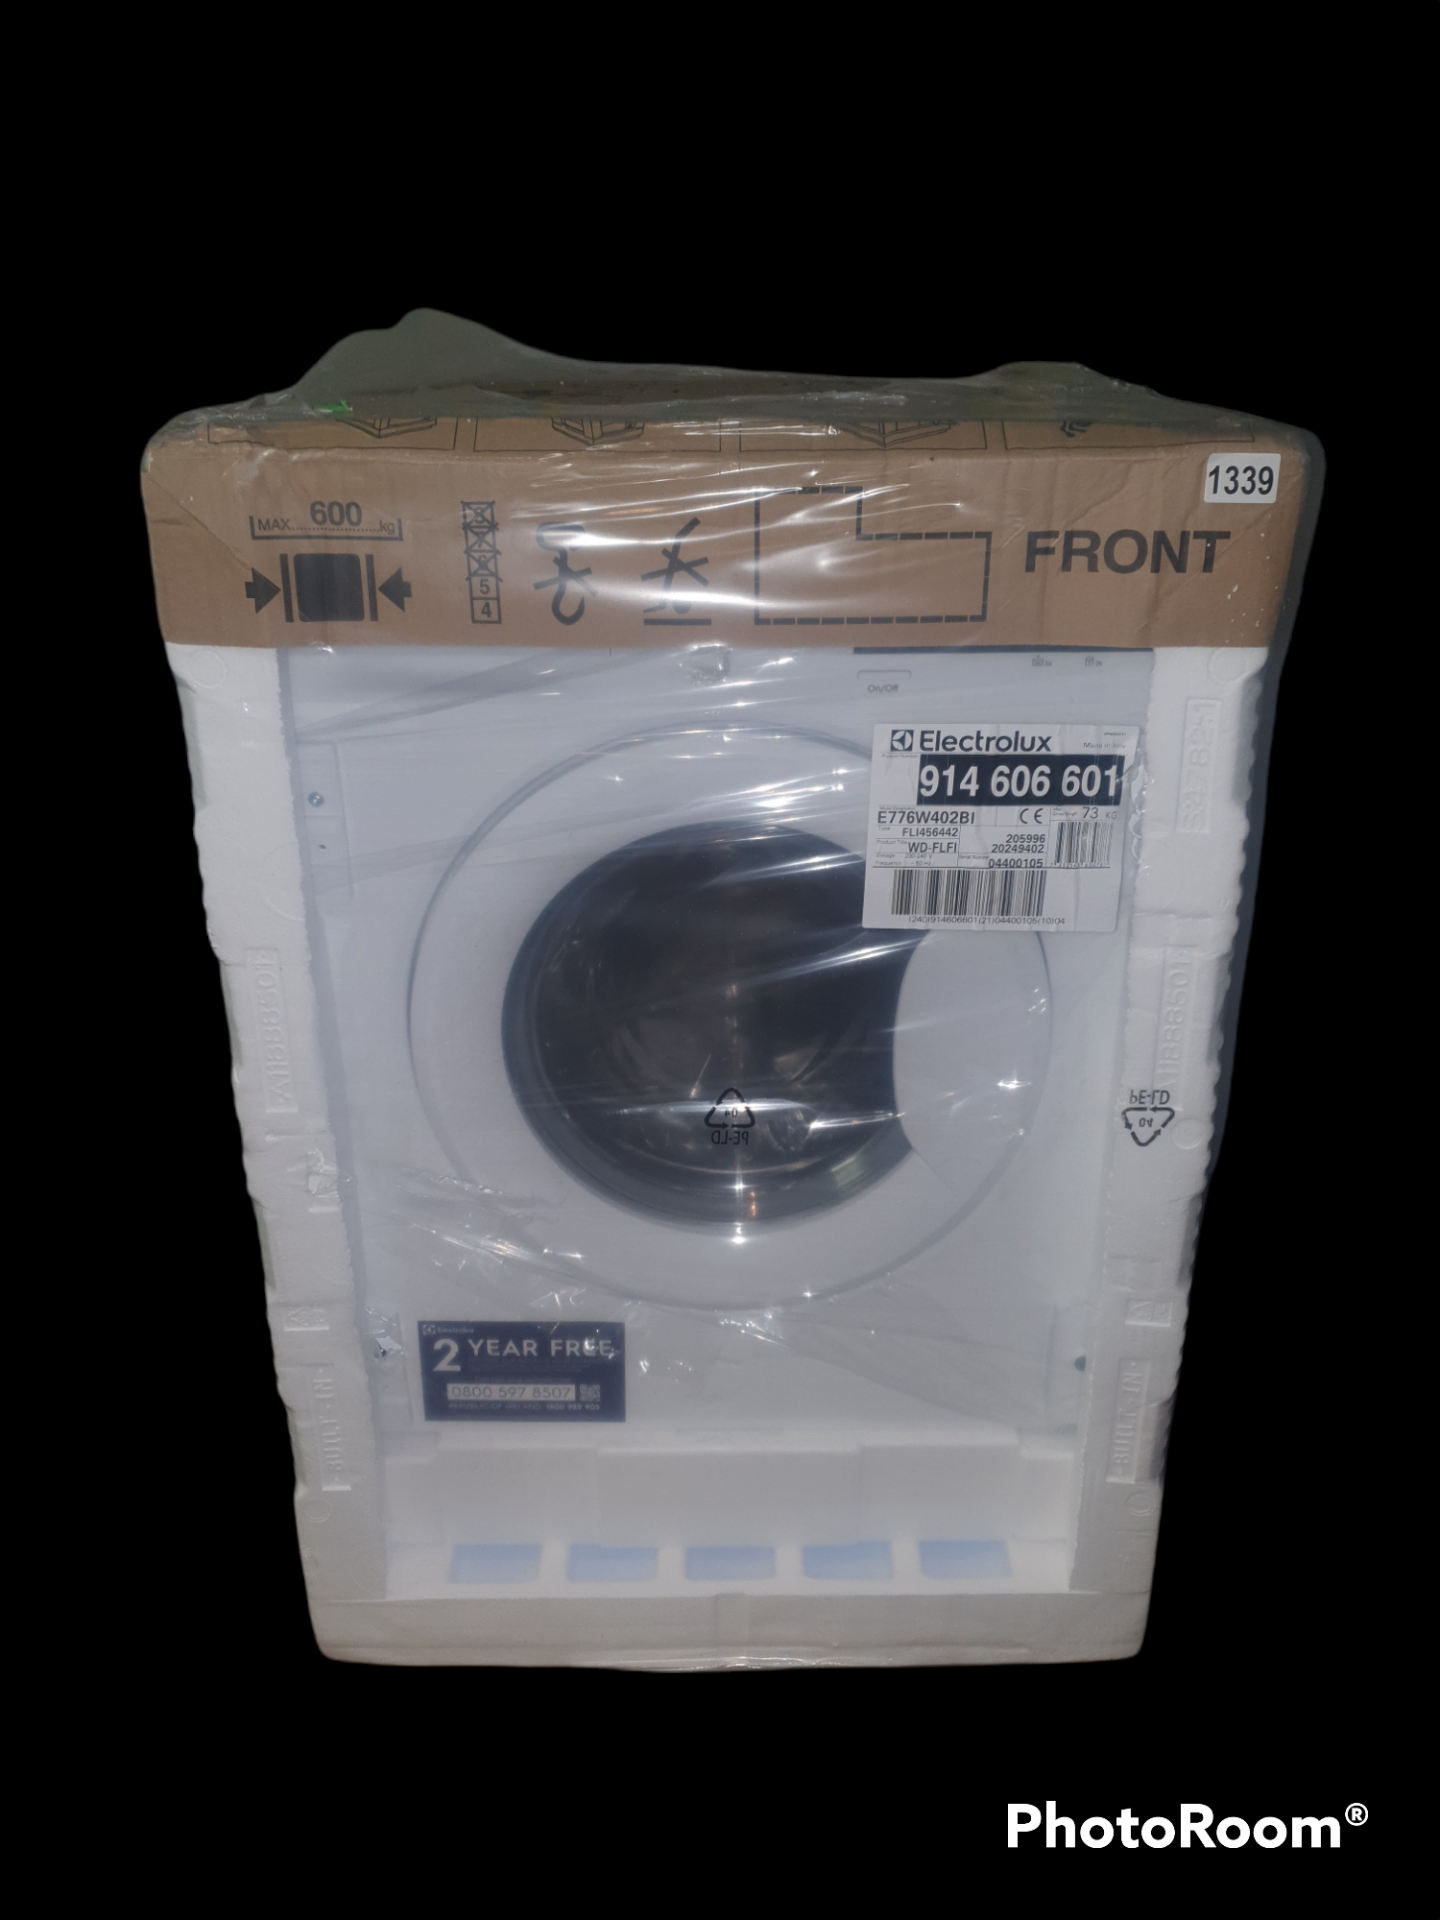 Electrolux 7kg Fully Integrated Washing Machine | E772F402BI RRP £649